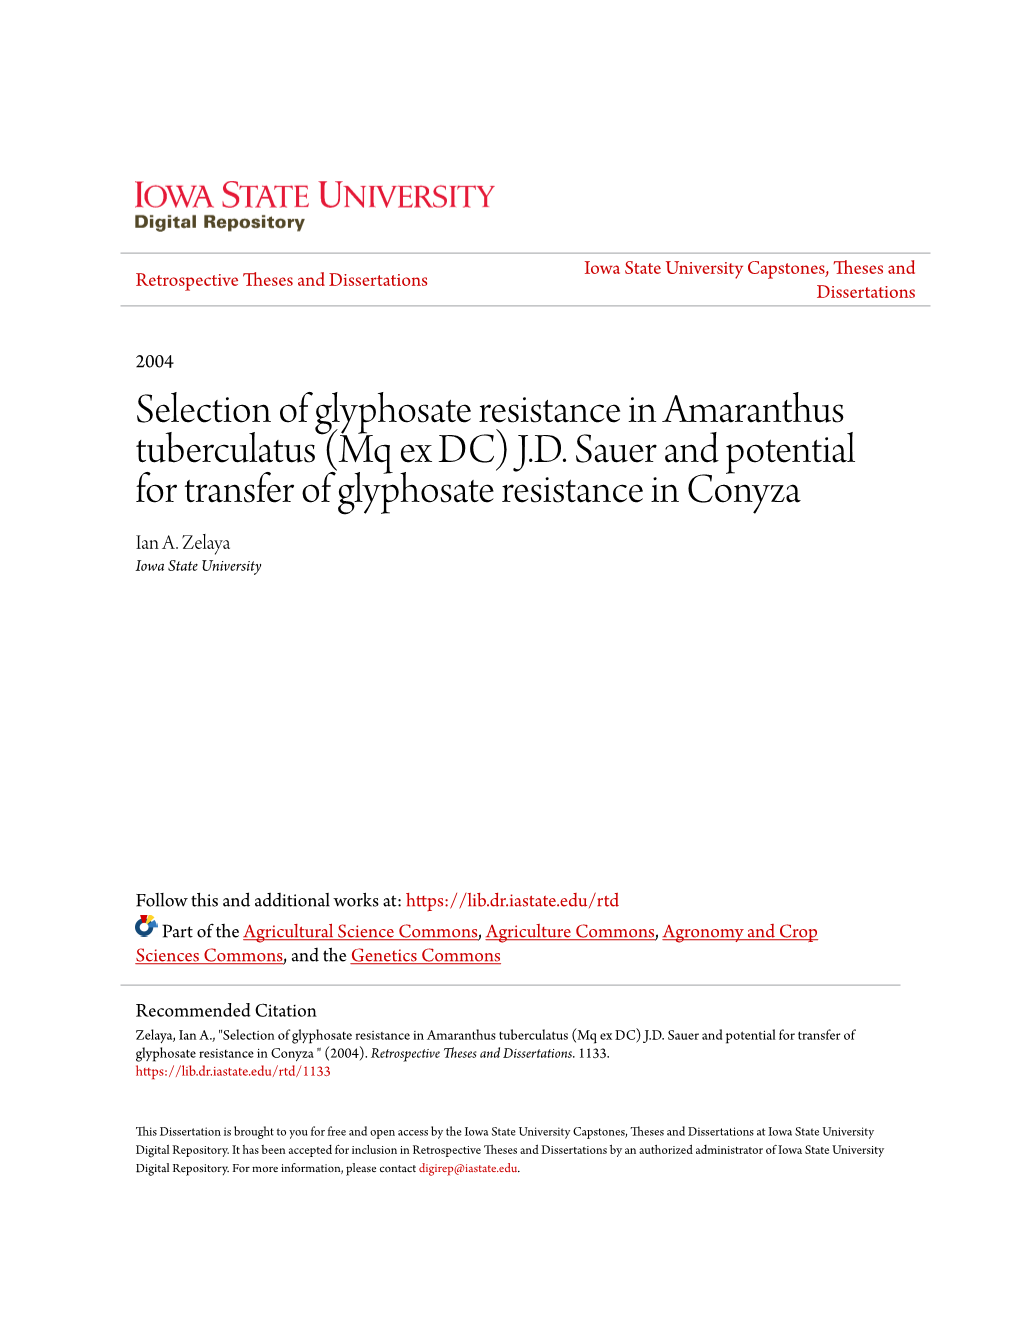 Selection of Glyphosate Resistance in Amaranthus Tuberculatus (Mq Ex DC) J.D